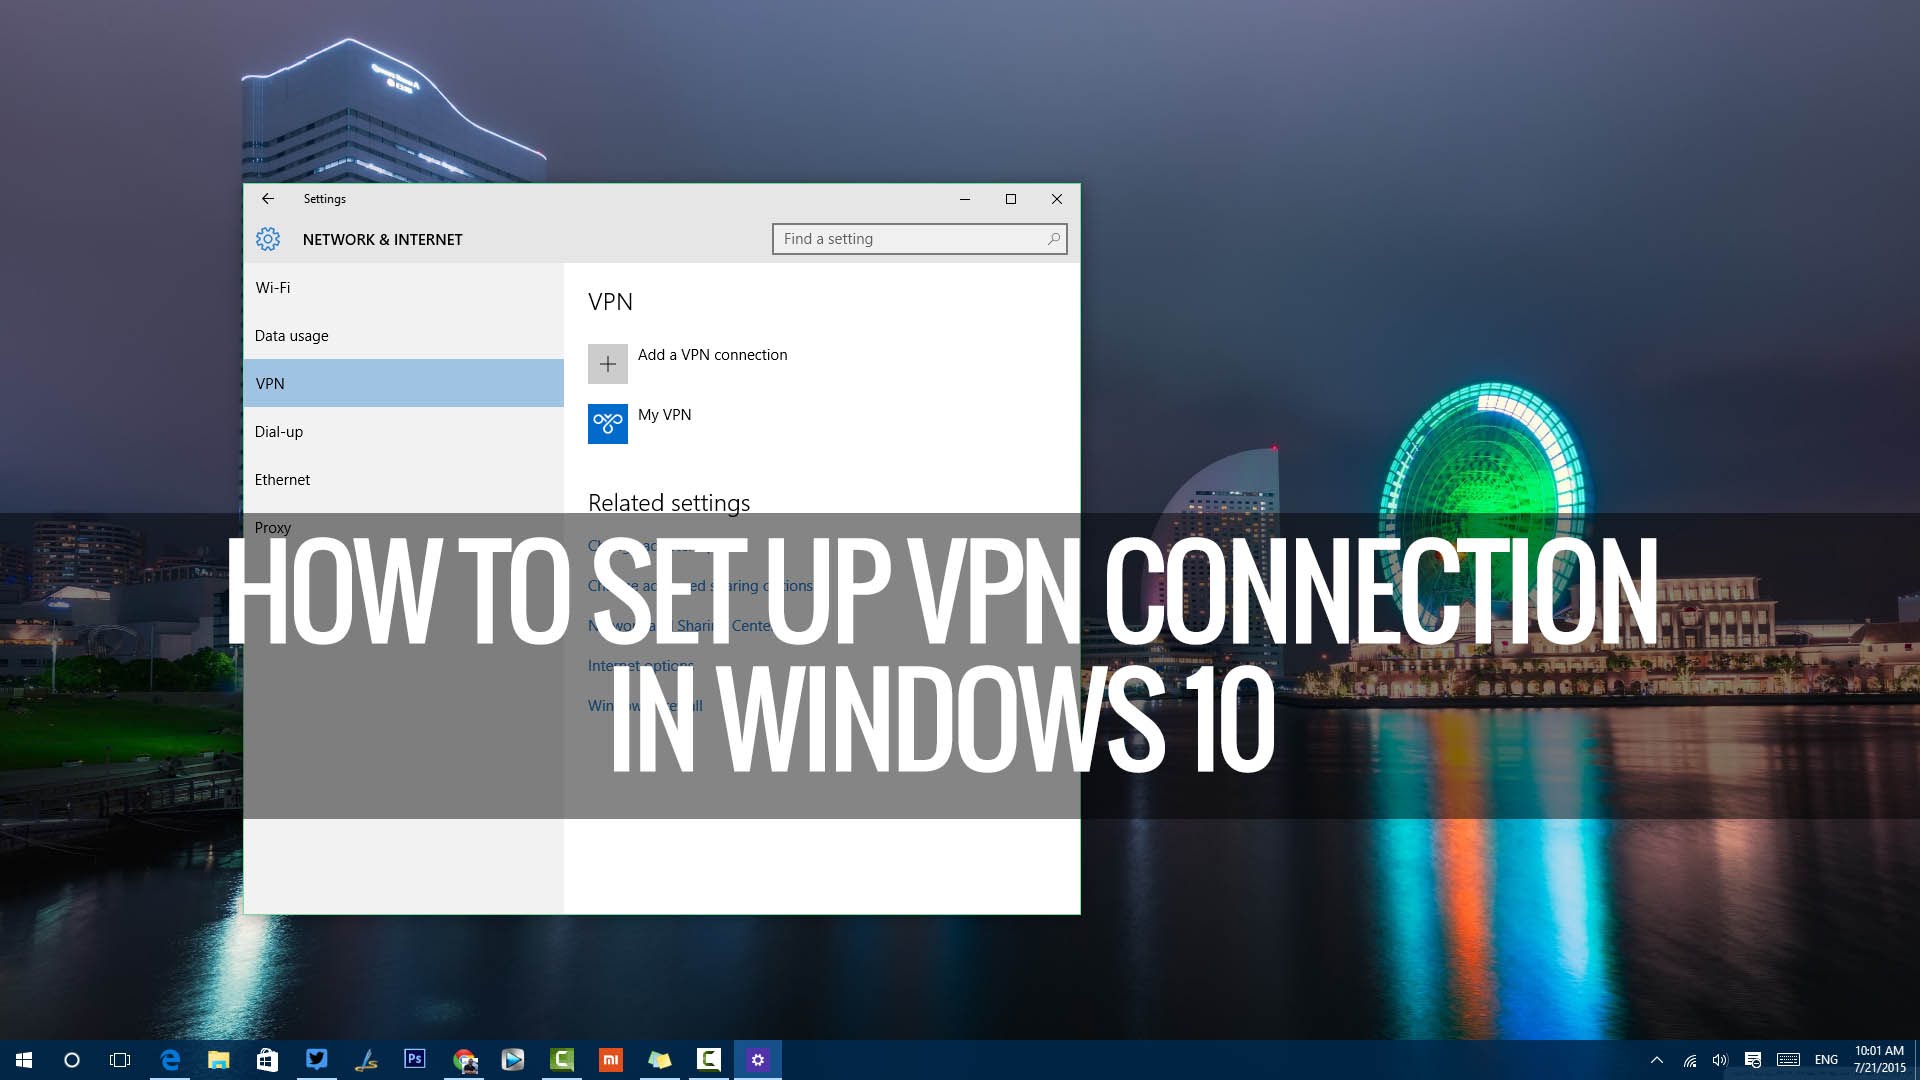 vpn windows 10 no internet